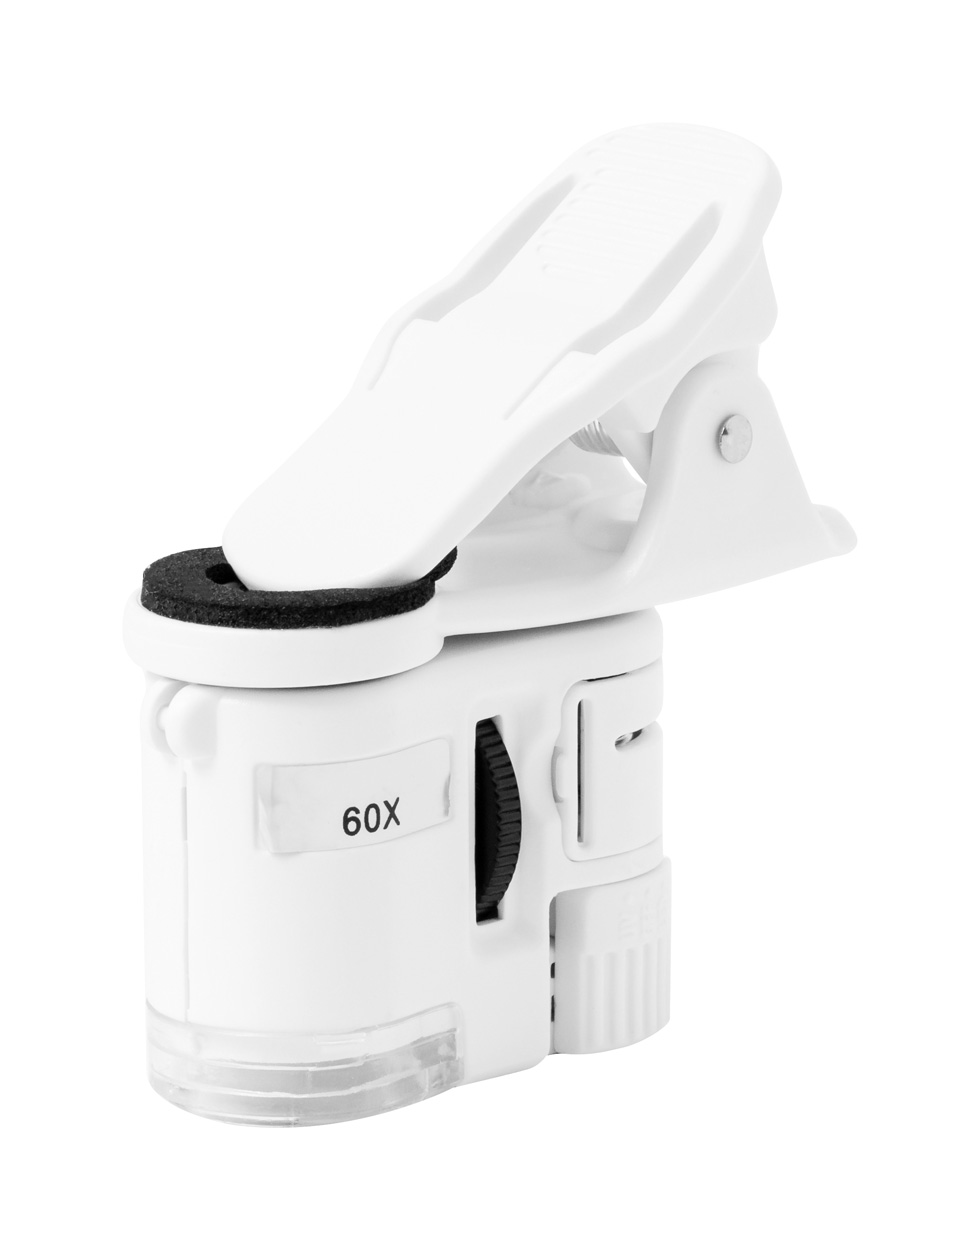 Saganix pocket microscope - white